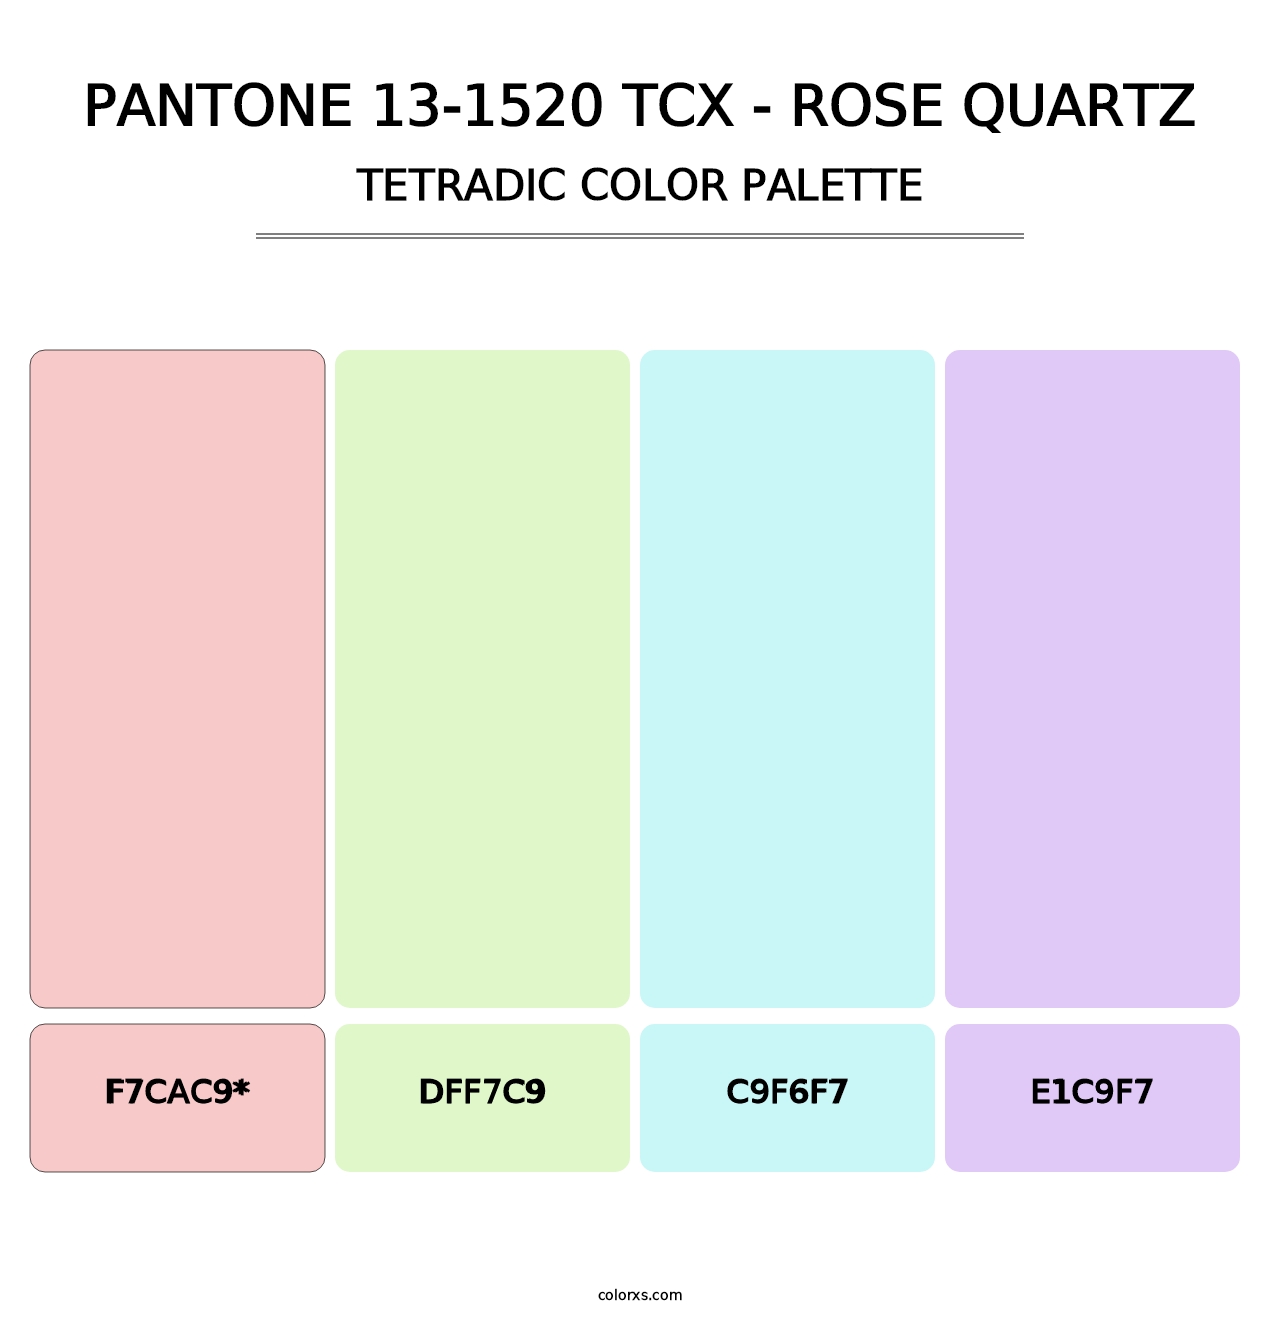 PANTONE 13-1520 TCX - Rose Quartz - Tetradic Color Palette